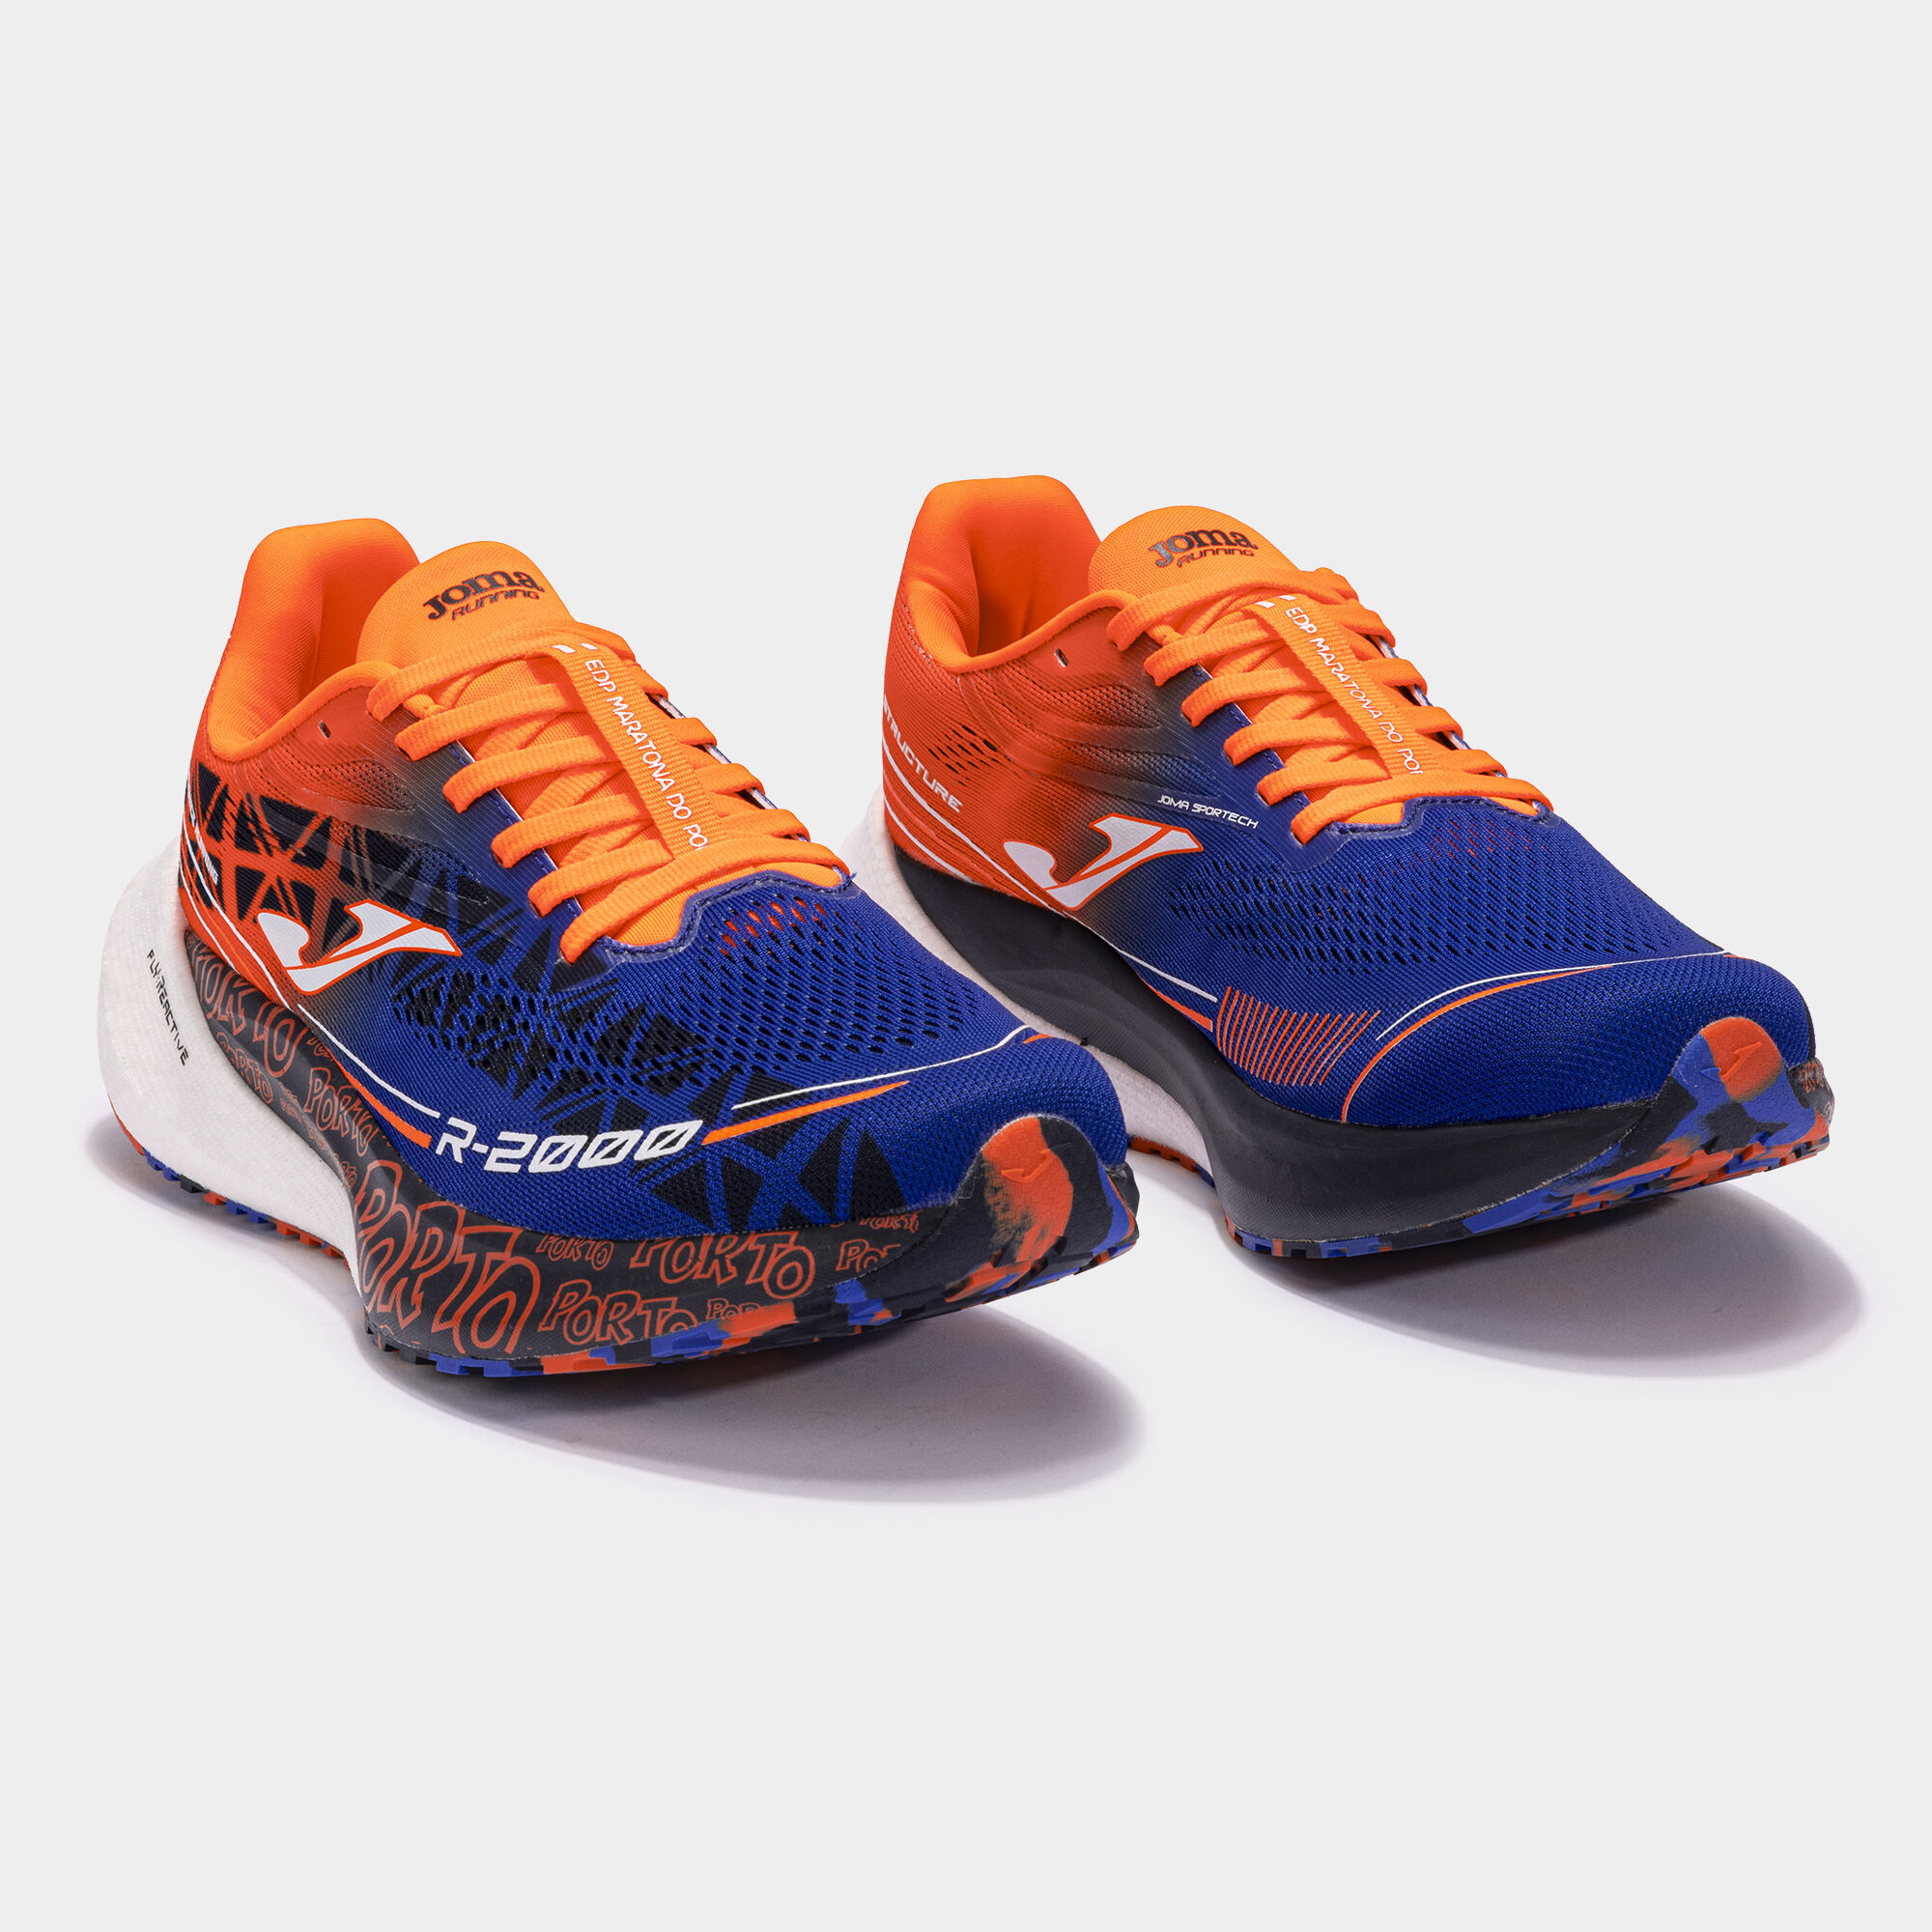 Chaussures running R.2000 23 Marathon De Oporto unisexe bleu roi orange